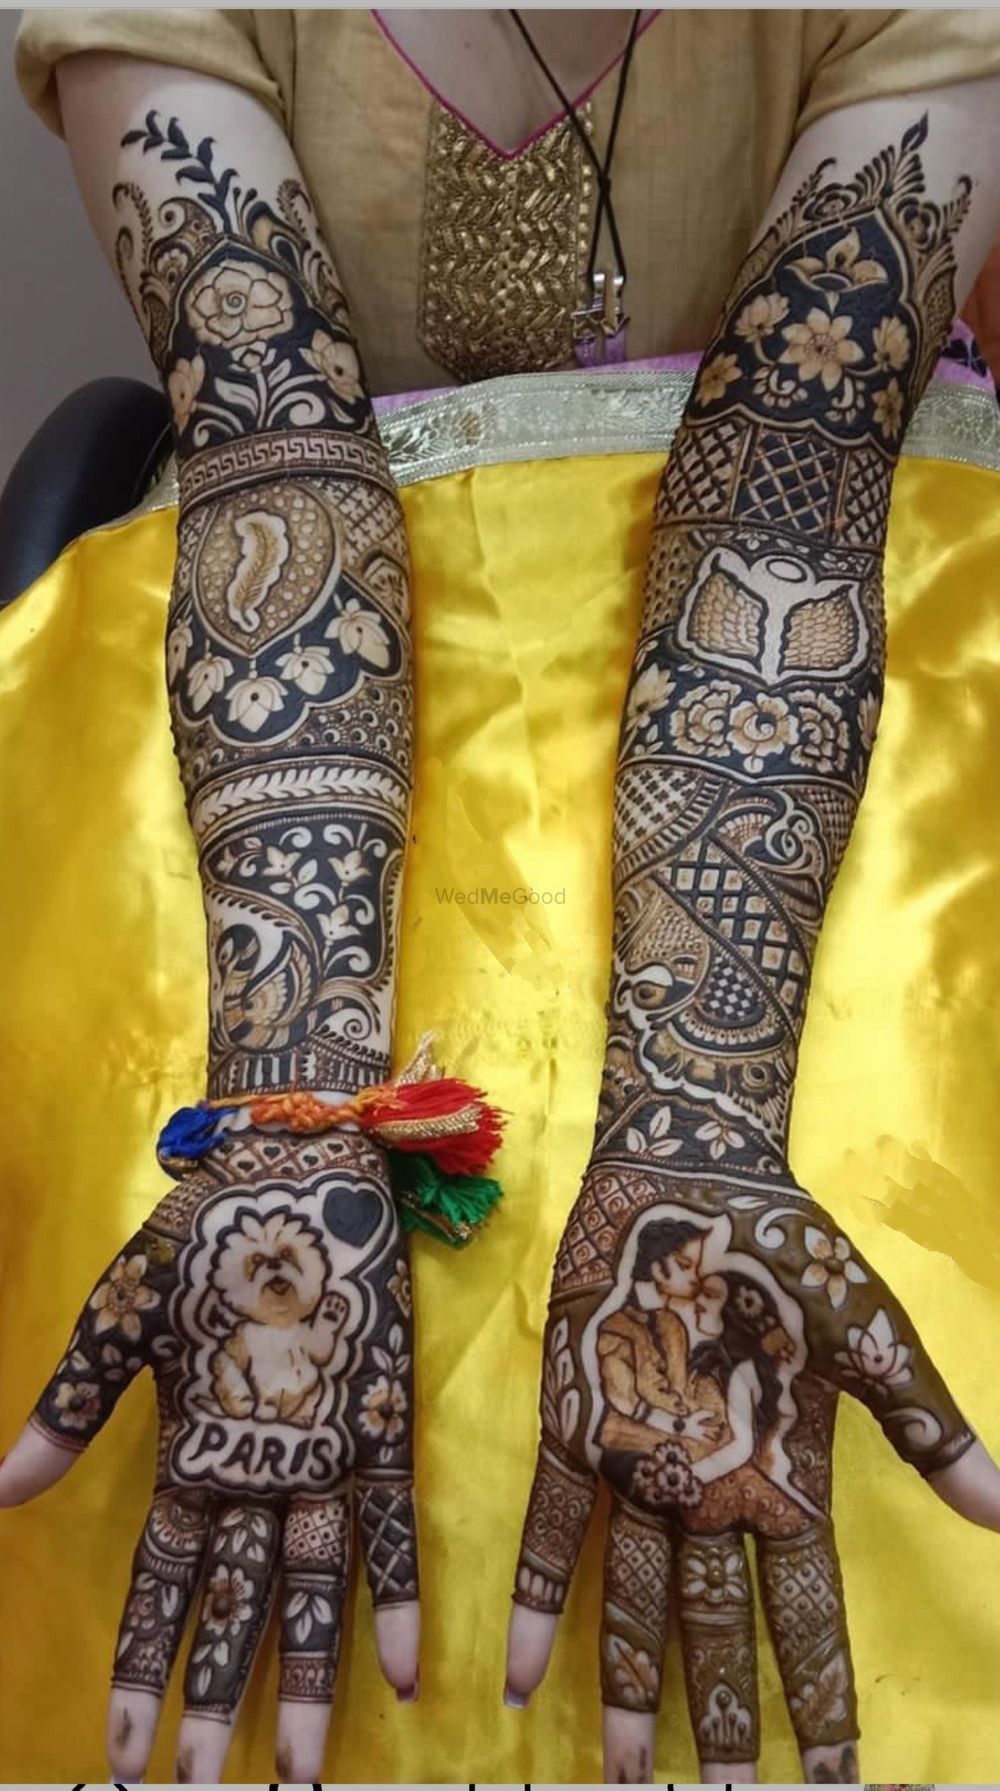 Photo By Ram Babu and Uday Mehendi Professional Bridal Mehndi Artist - Mehendi Artist